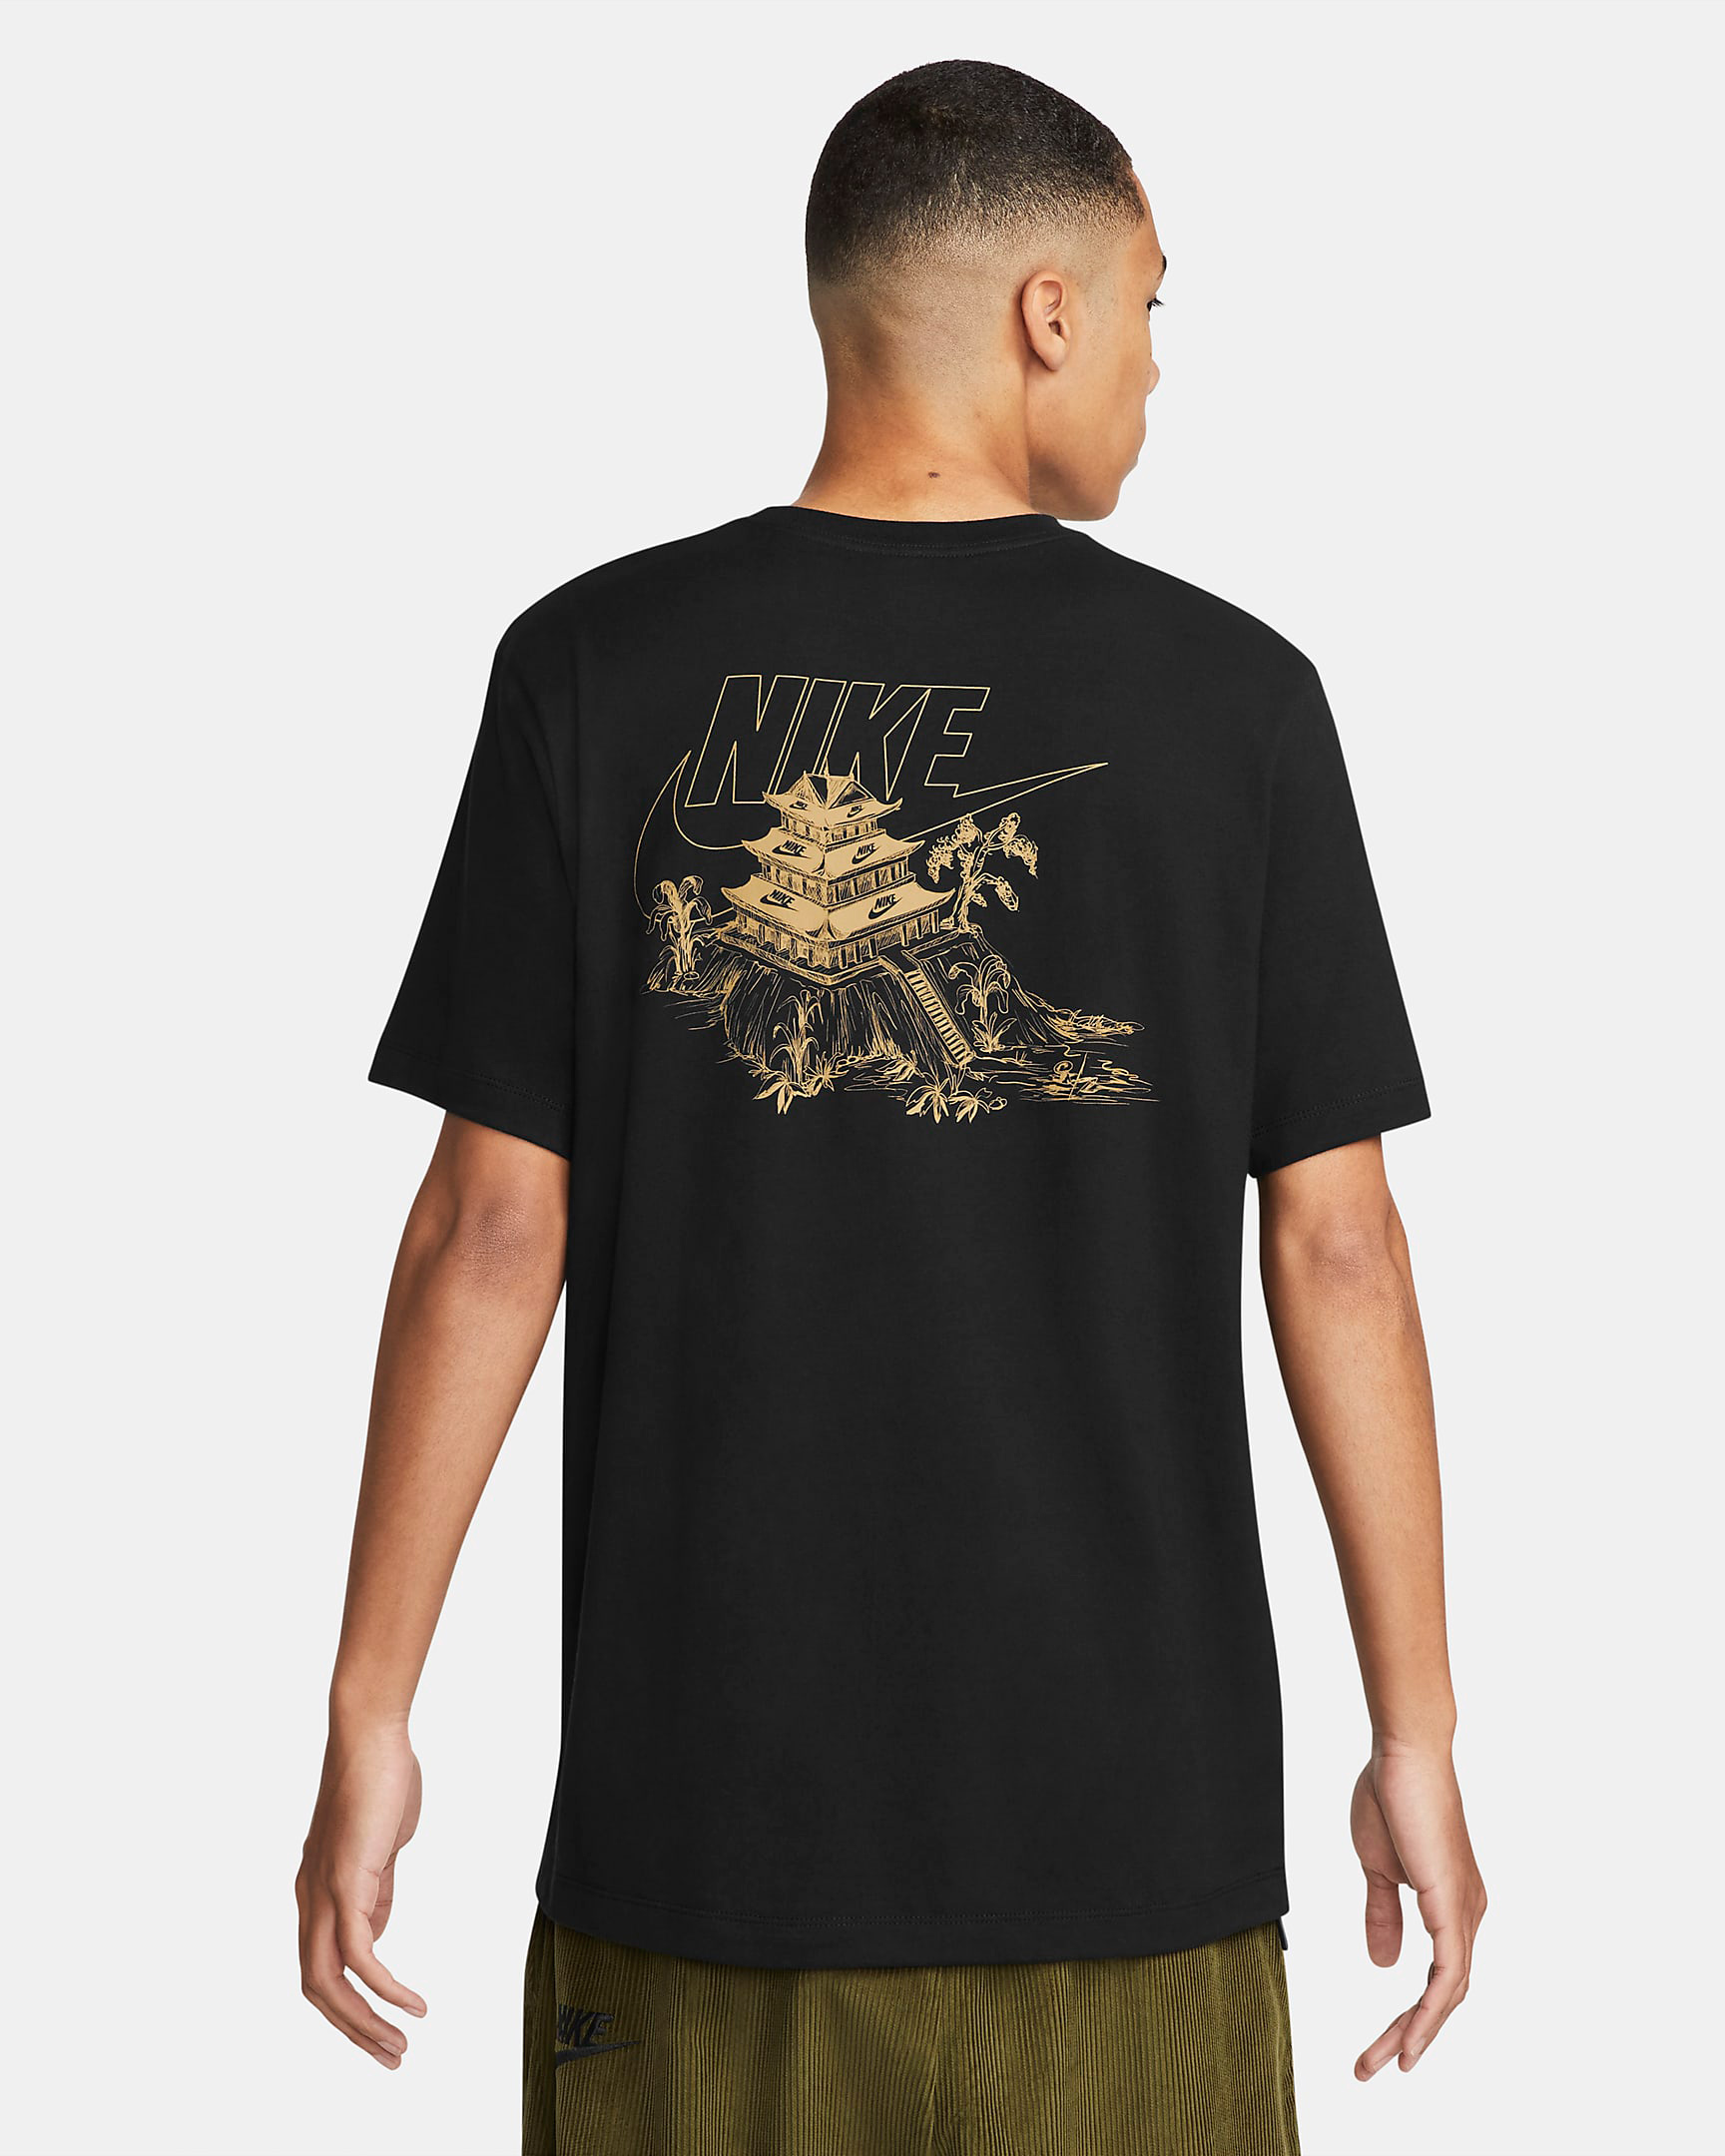 nike-lunar-new-year-t-shirt-black-gold-2